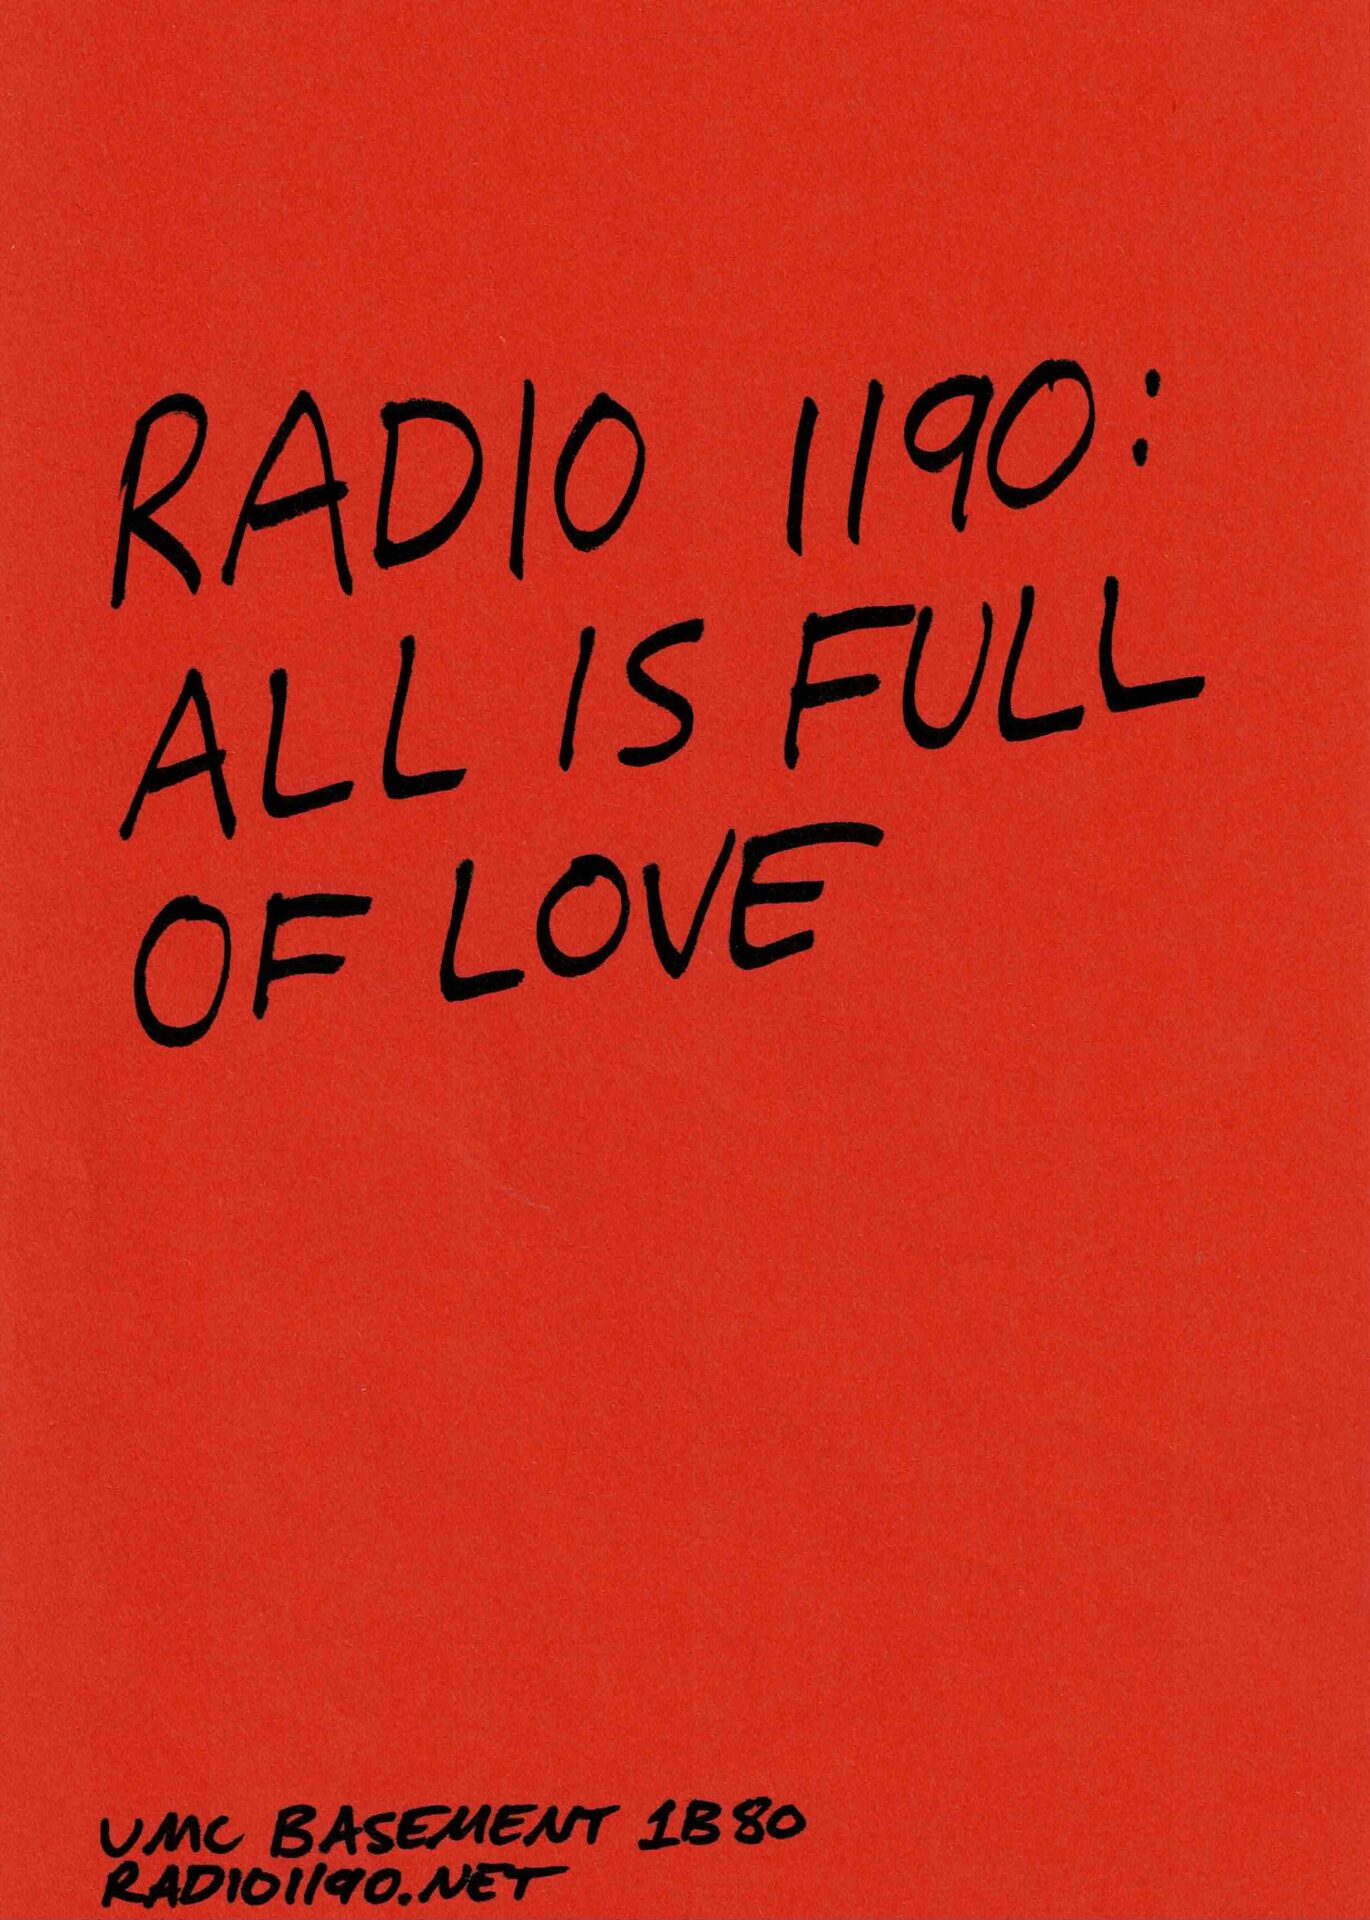 Radio 1190: All is full of love